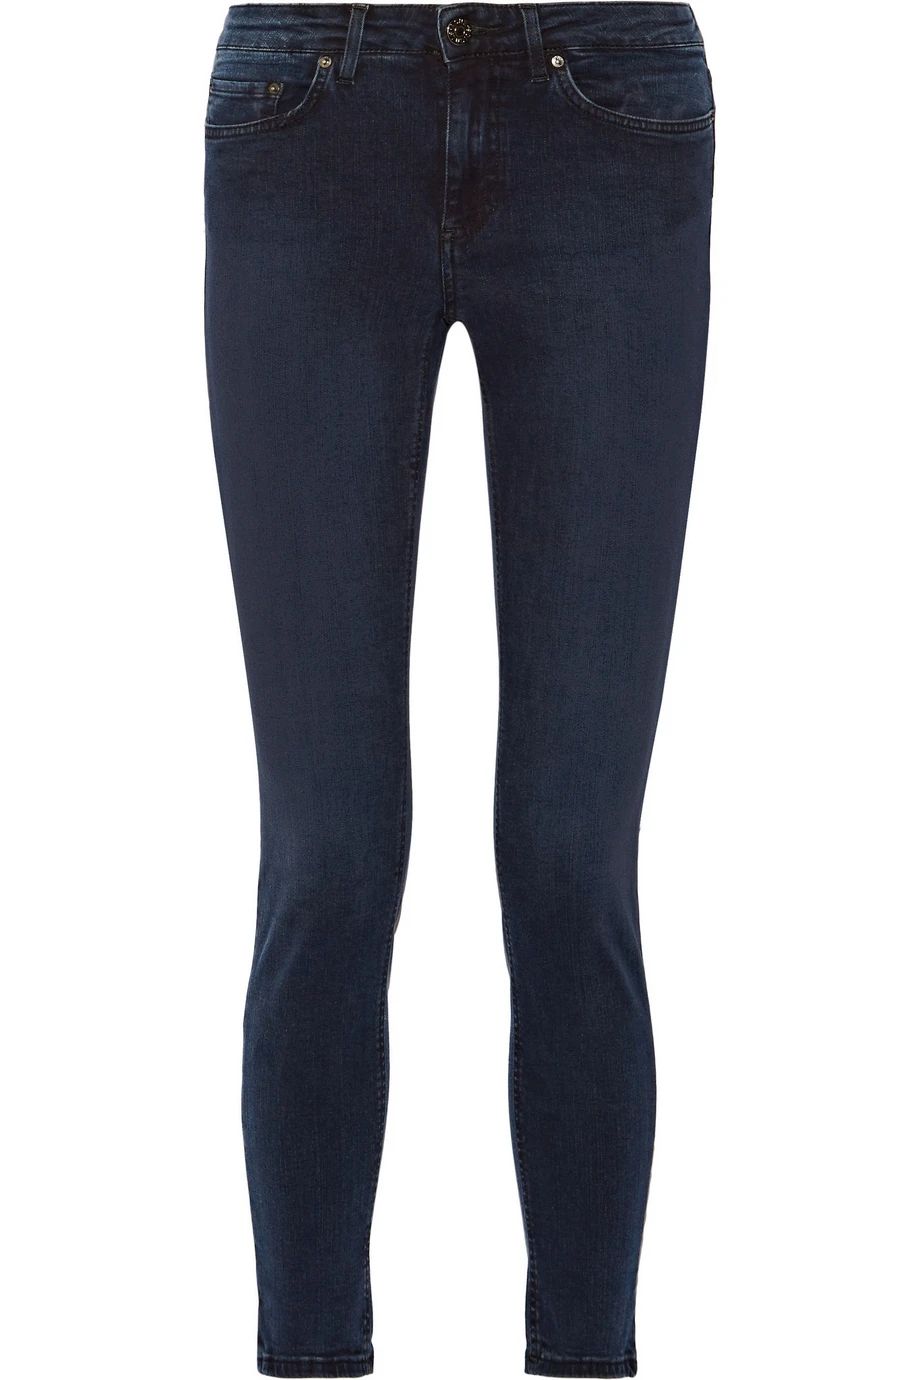 Acne Studios Skin 5 Pocket Deep mid-rise skinny jeans, Women's, Size: 23 | NET-A-PORTER (UK & EU)